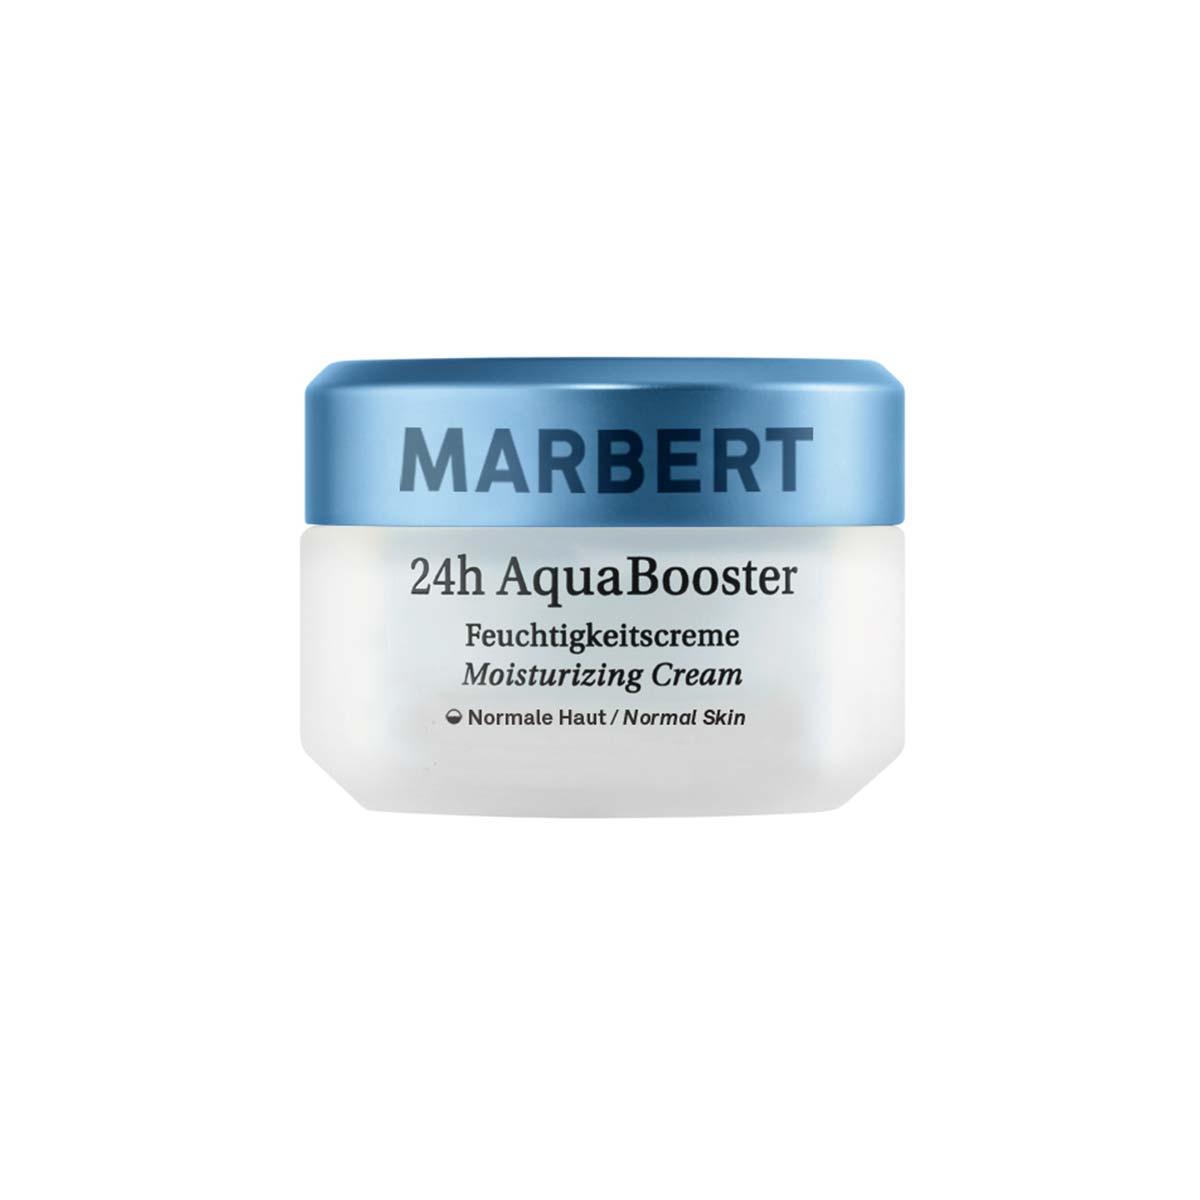 کرم آبرسان ماربرت 24 ساعته مناسب پوست نرمال مدل MARBERT aquabooster 24h حجم 50 میلی لیتر